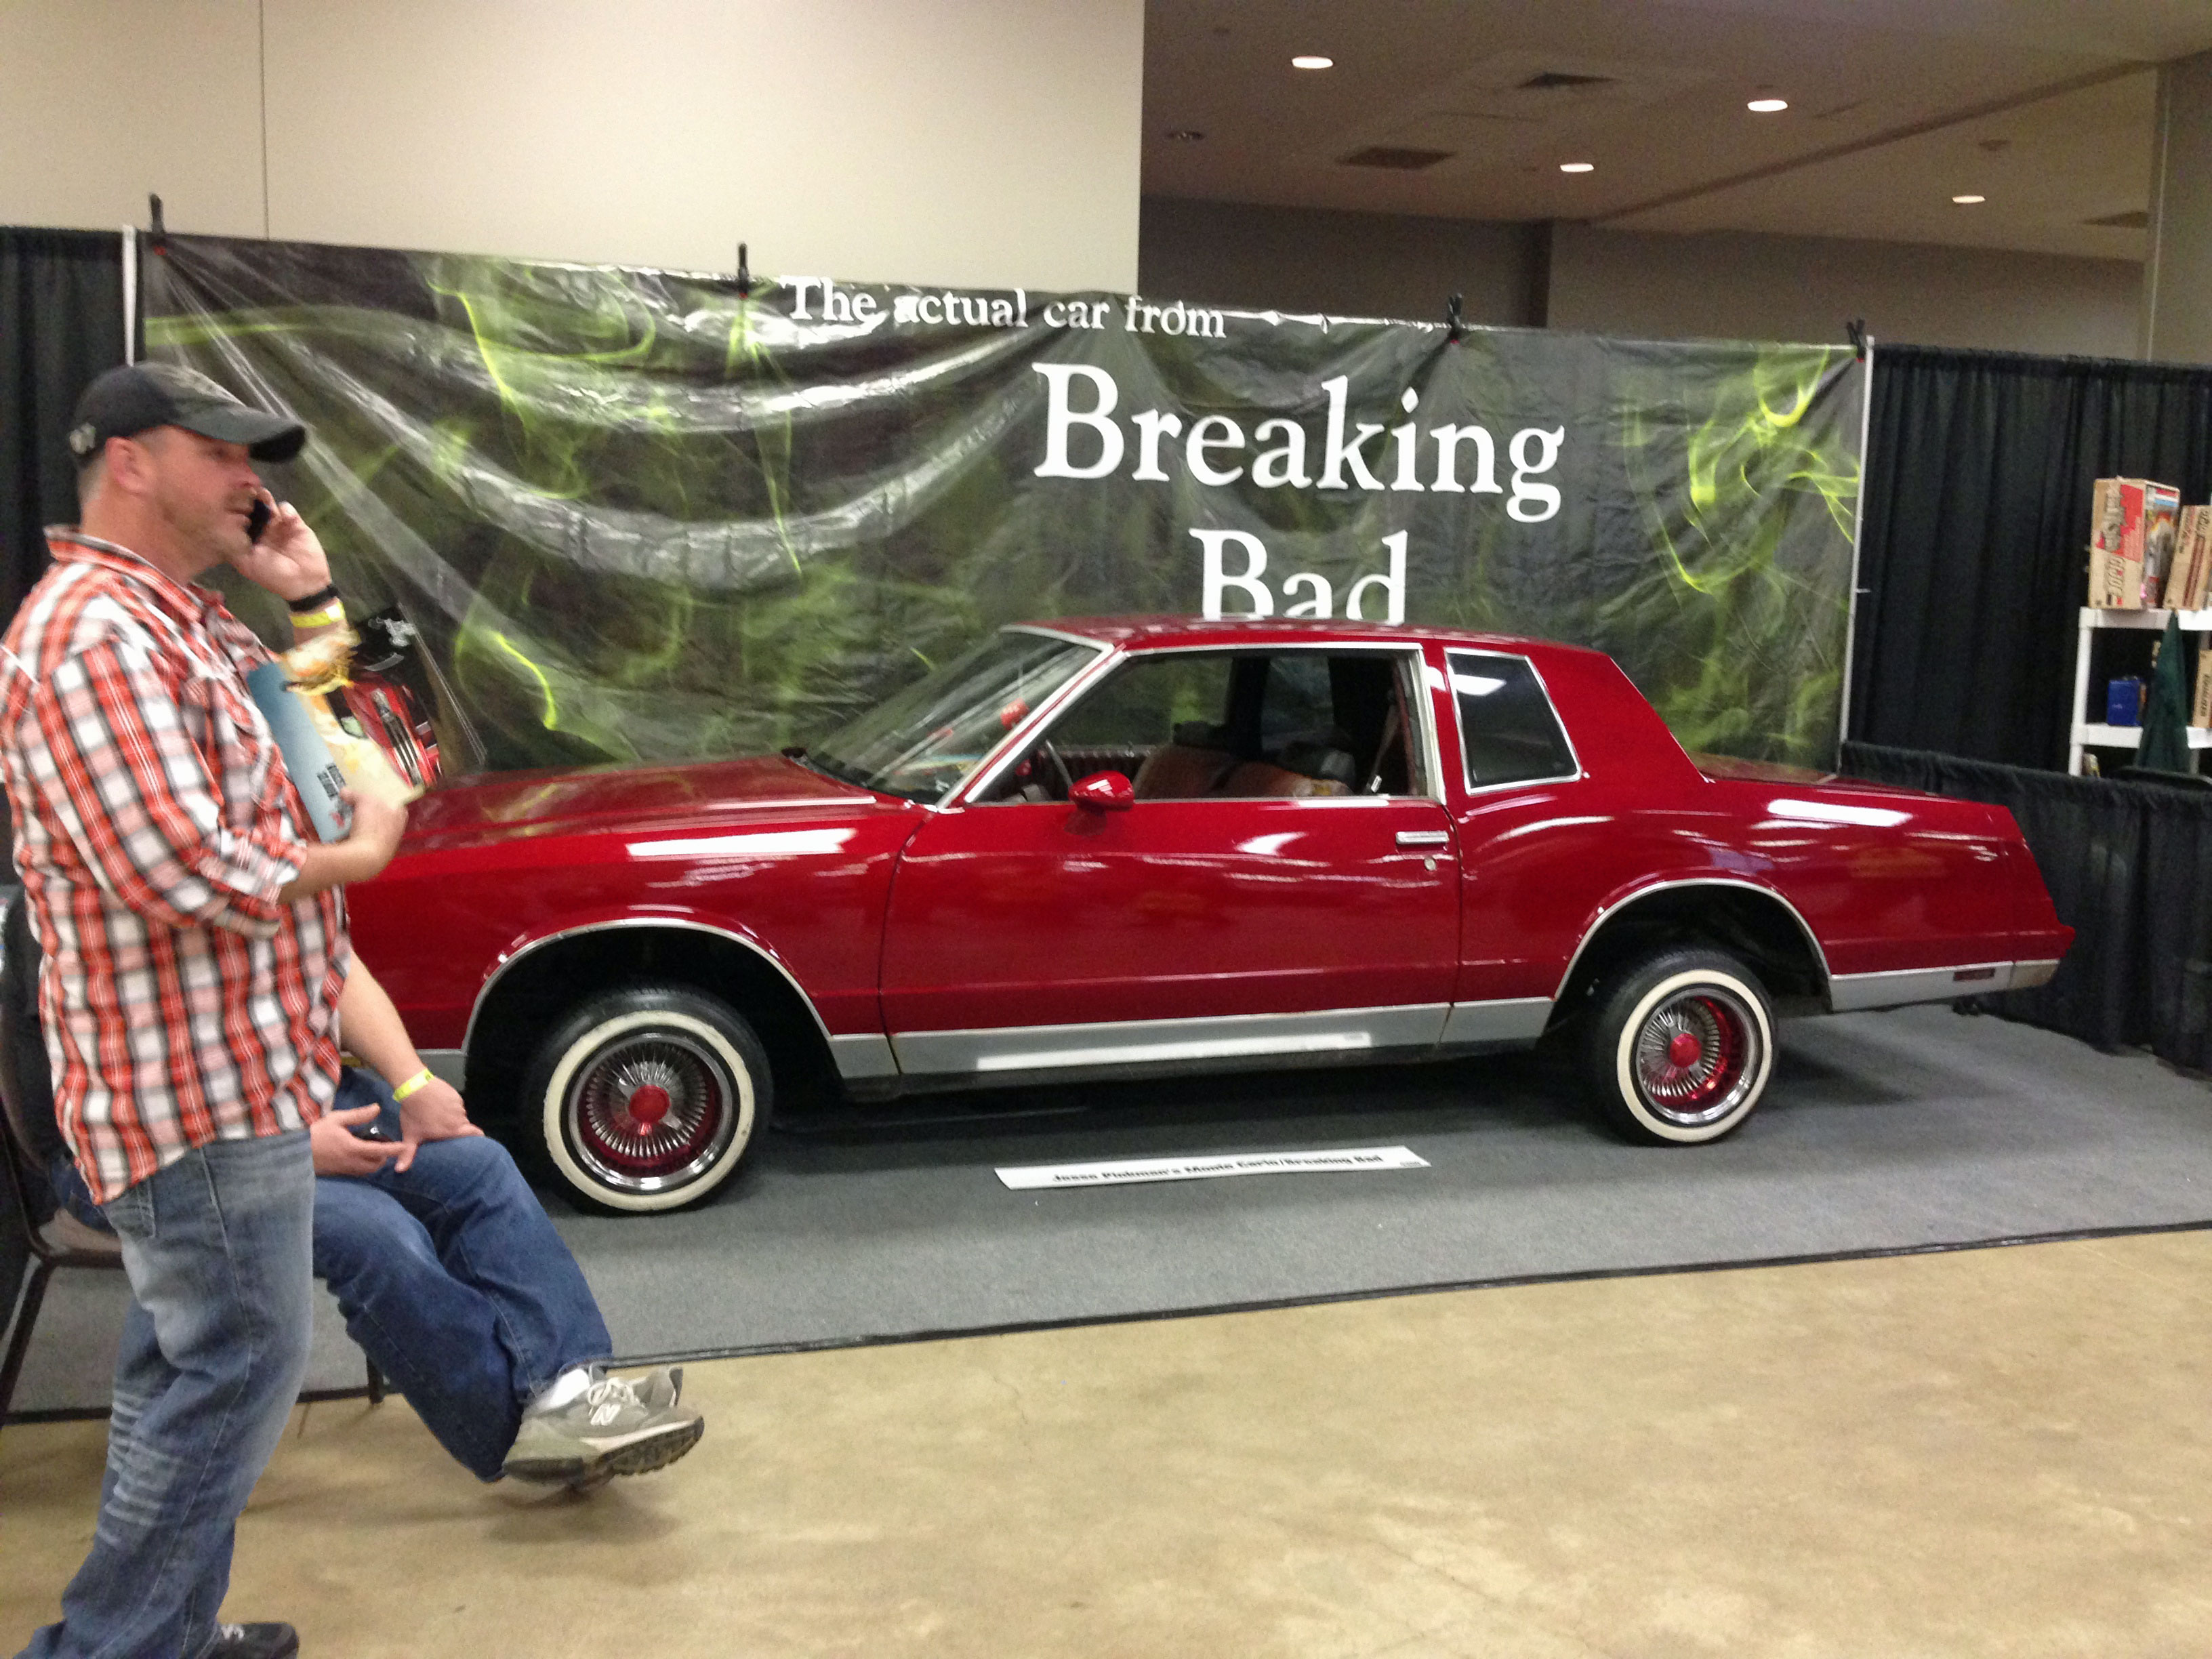 Jesse Pinkman’s car from Breaking Bad. 